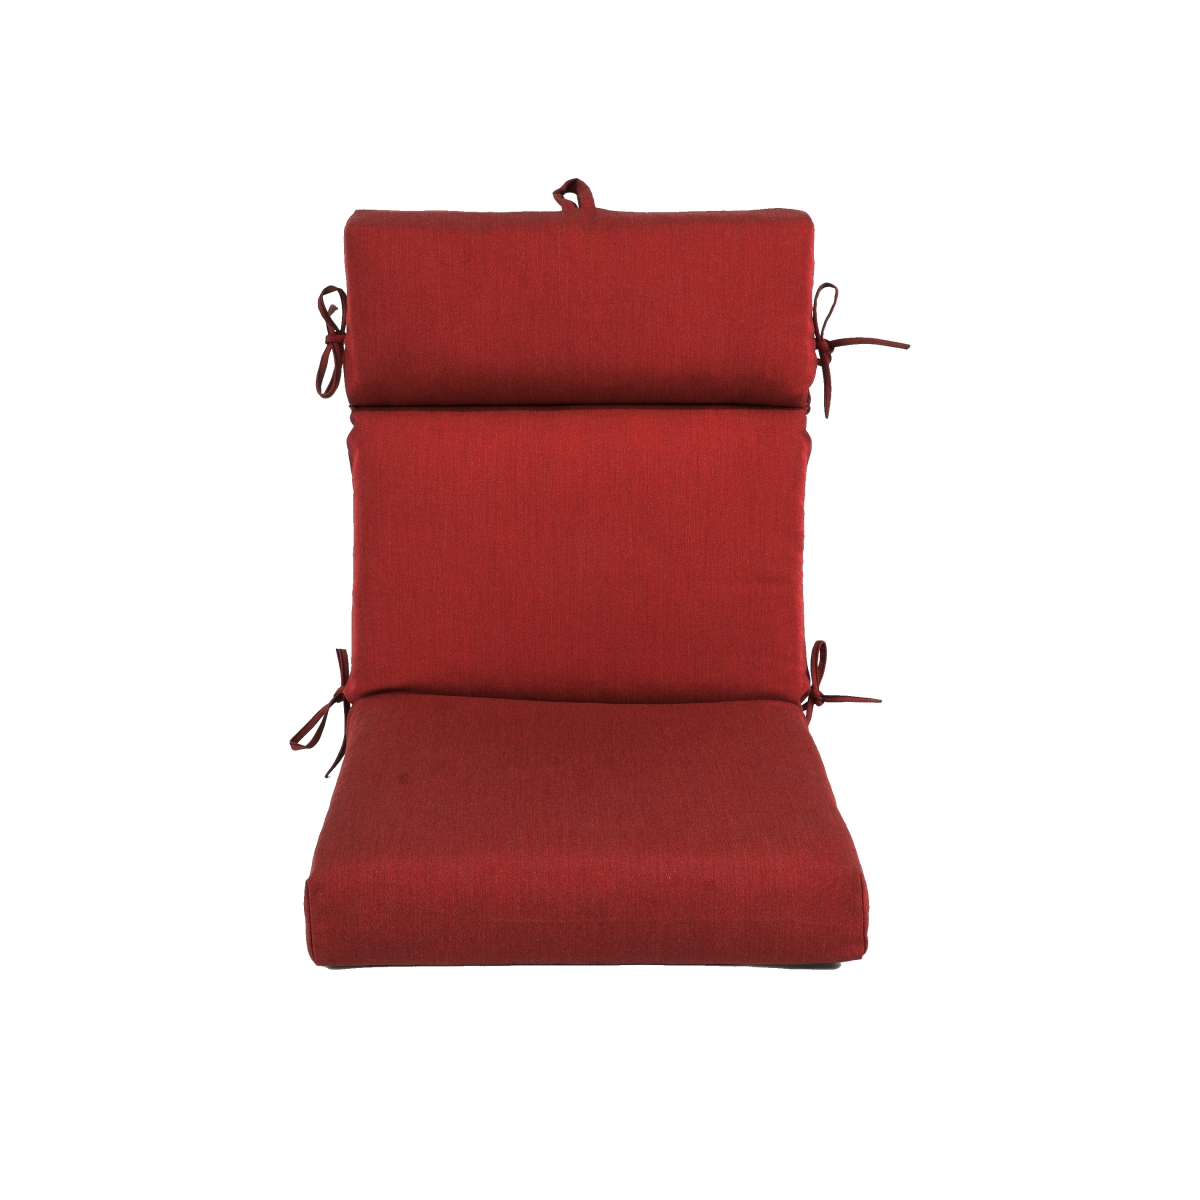 Cudc44-sda07 44 X 21 In. Pacifica Premium Patio Dining Chair Cushion In Caliente